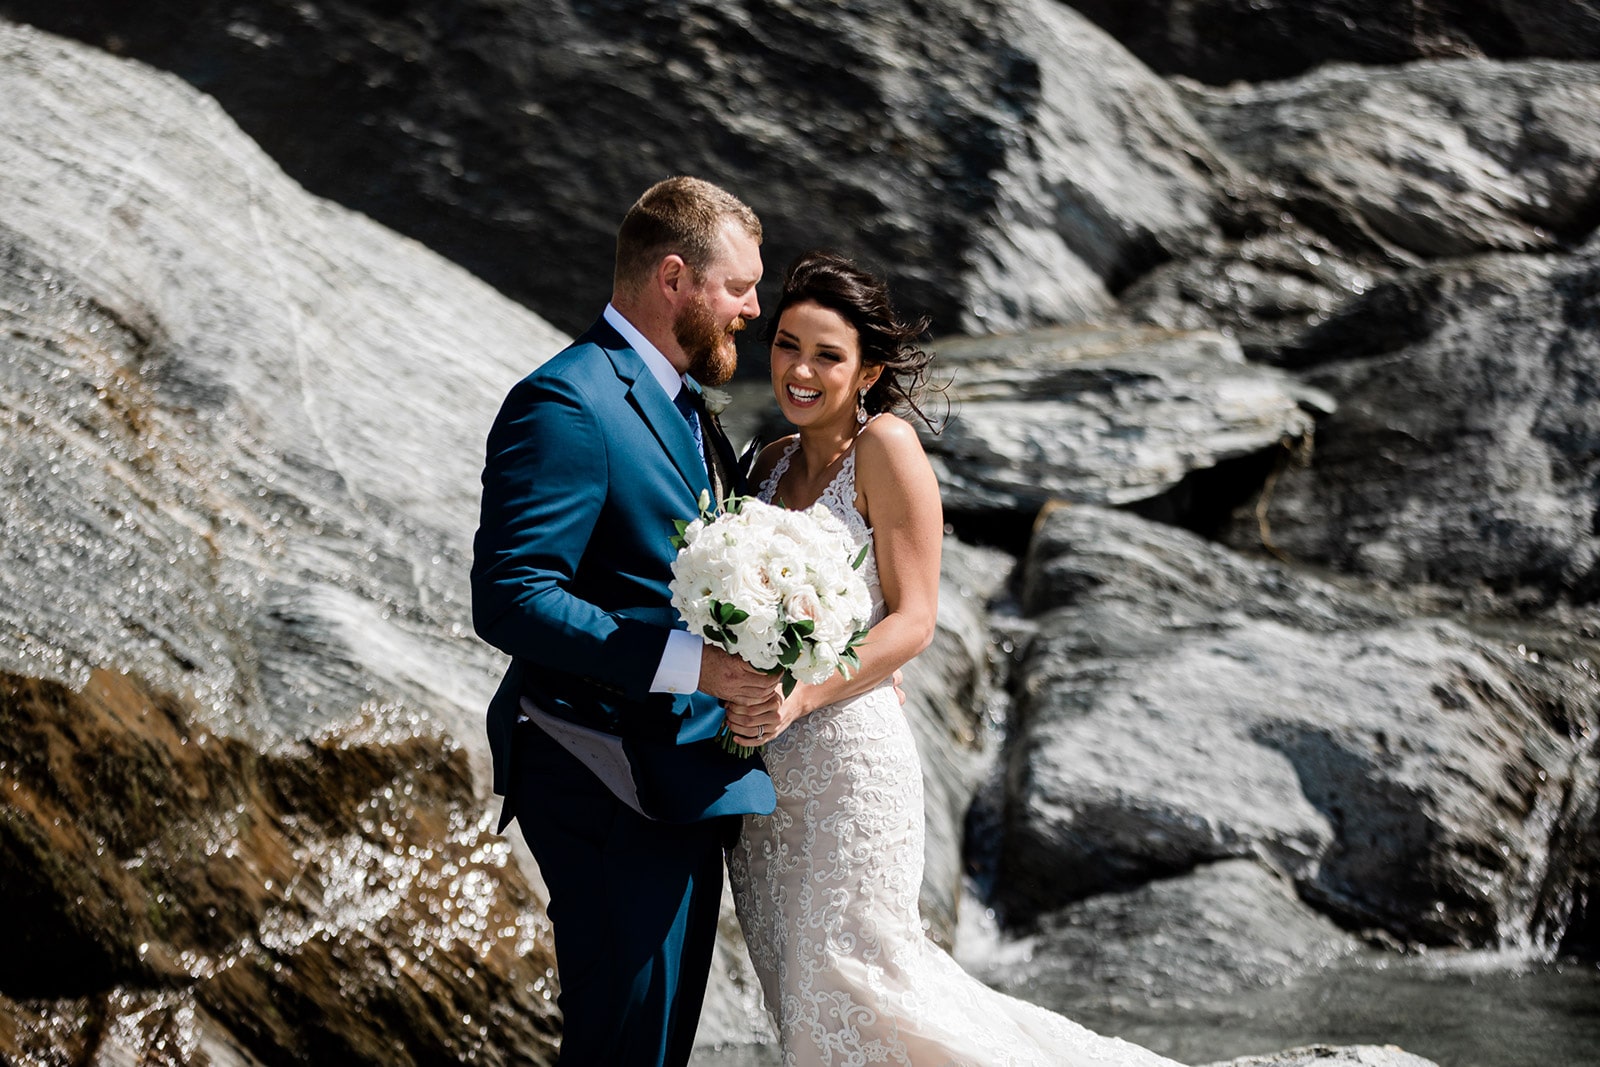 Exclusive Heli Wedding in Queenstown New Zealand with American couple at Lochnagar